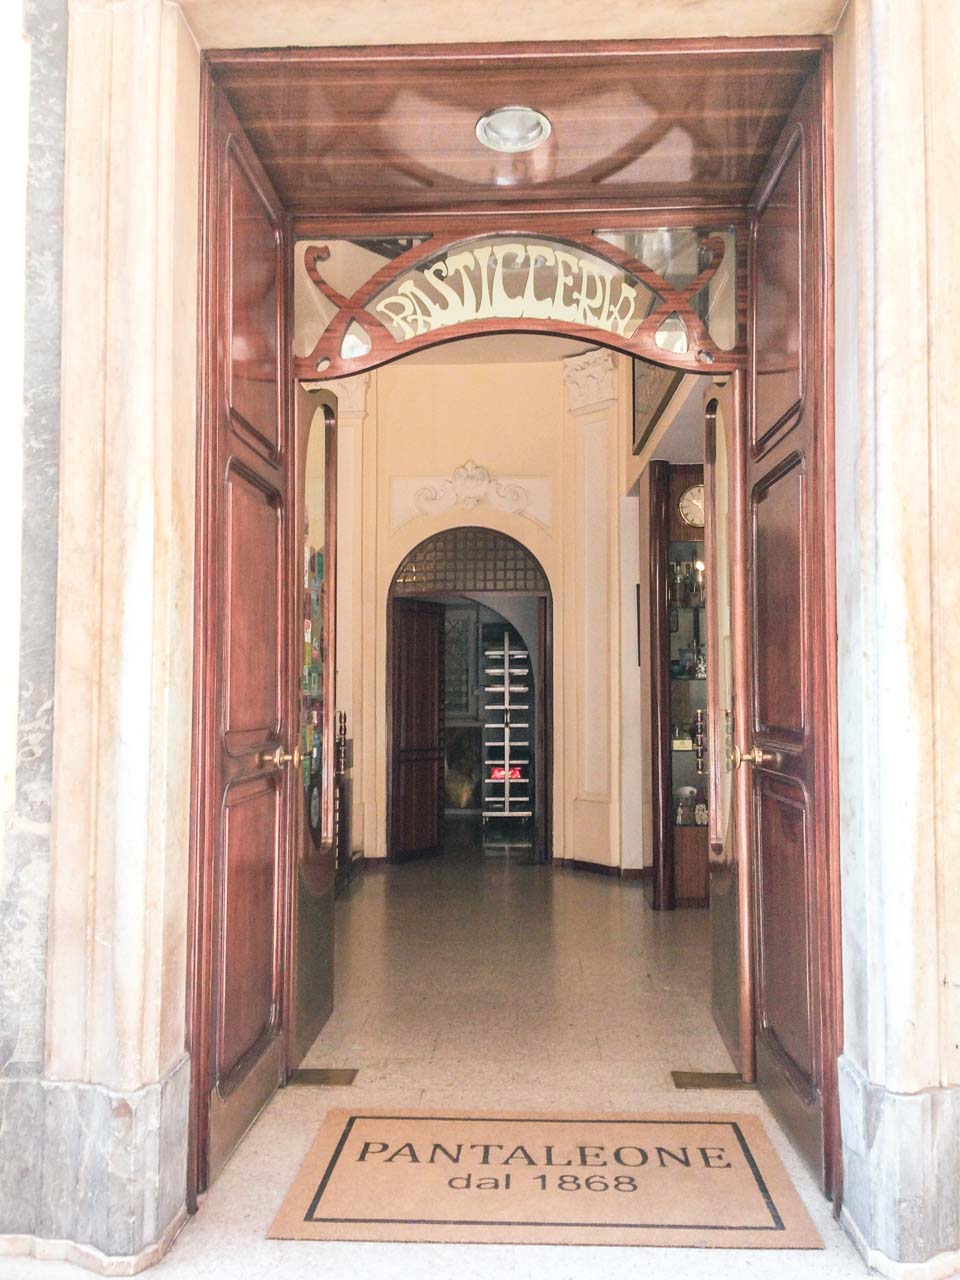 The entrance to Pasticceria Pantaleone in Salerno, Italy